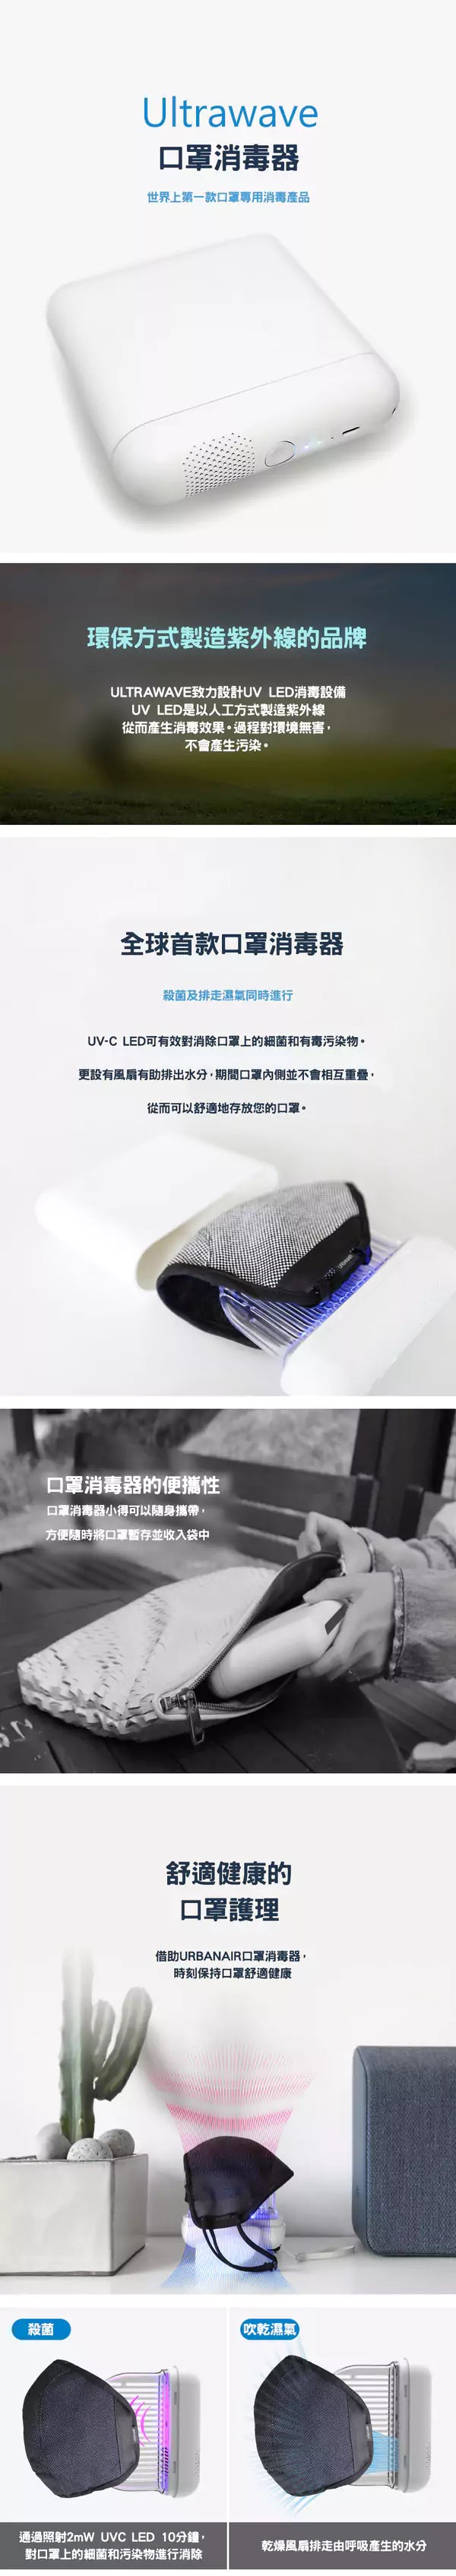 UV-C LED口罩消毒存放盒|韓國Ultrawave